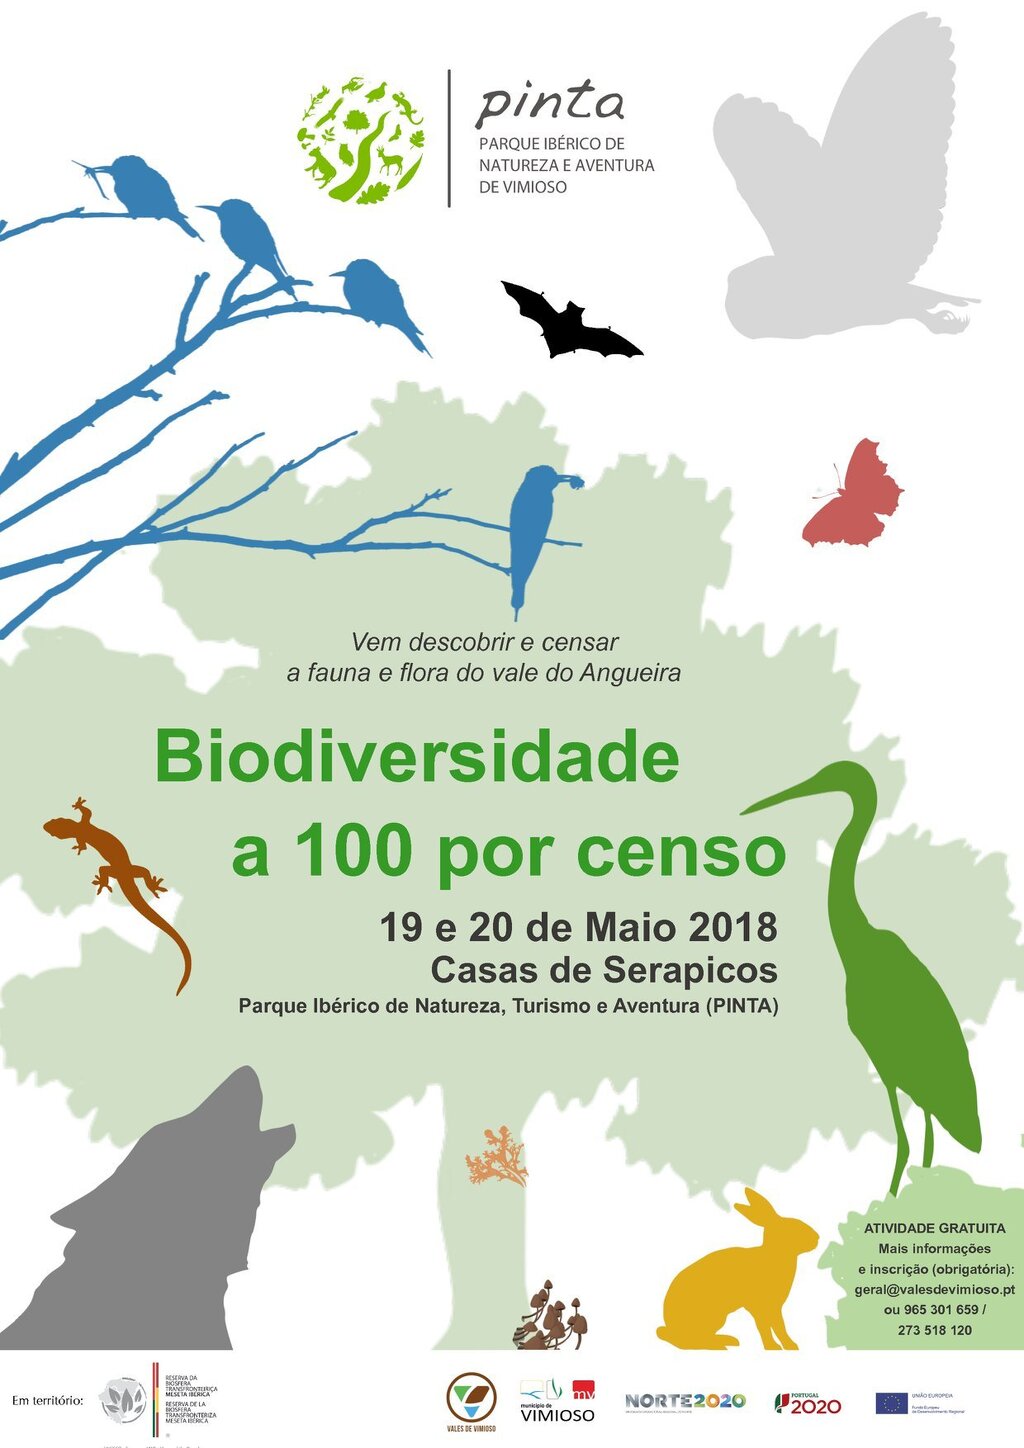 Biodiversidade a 100 por censo